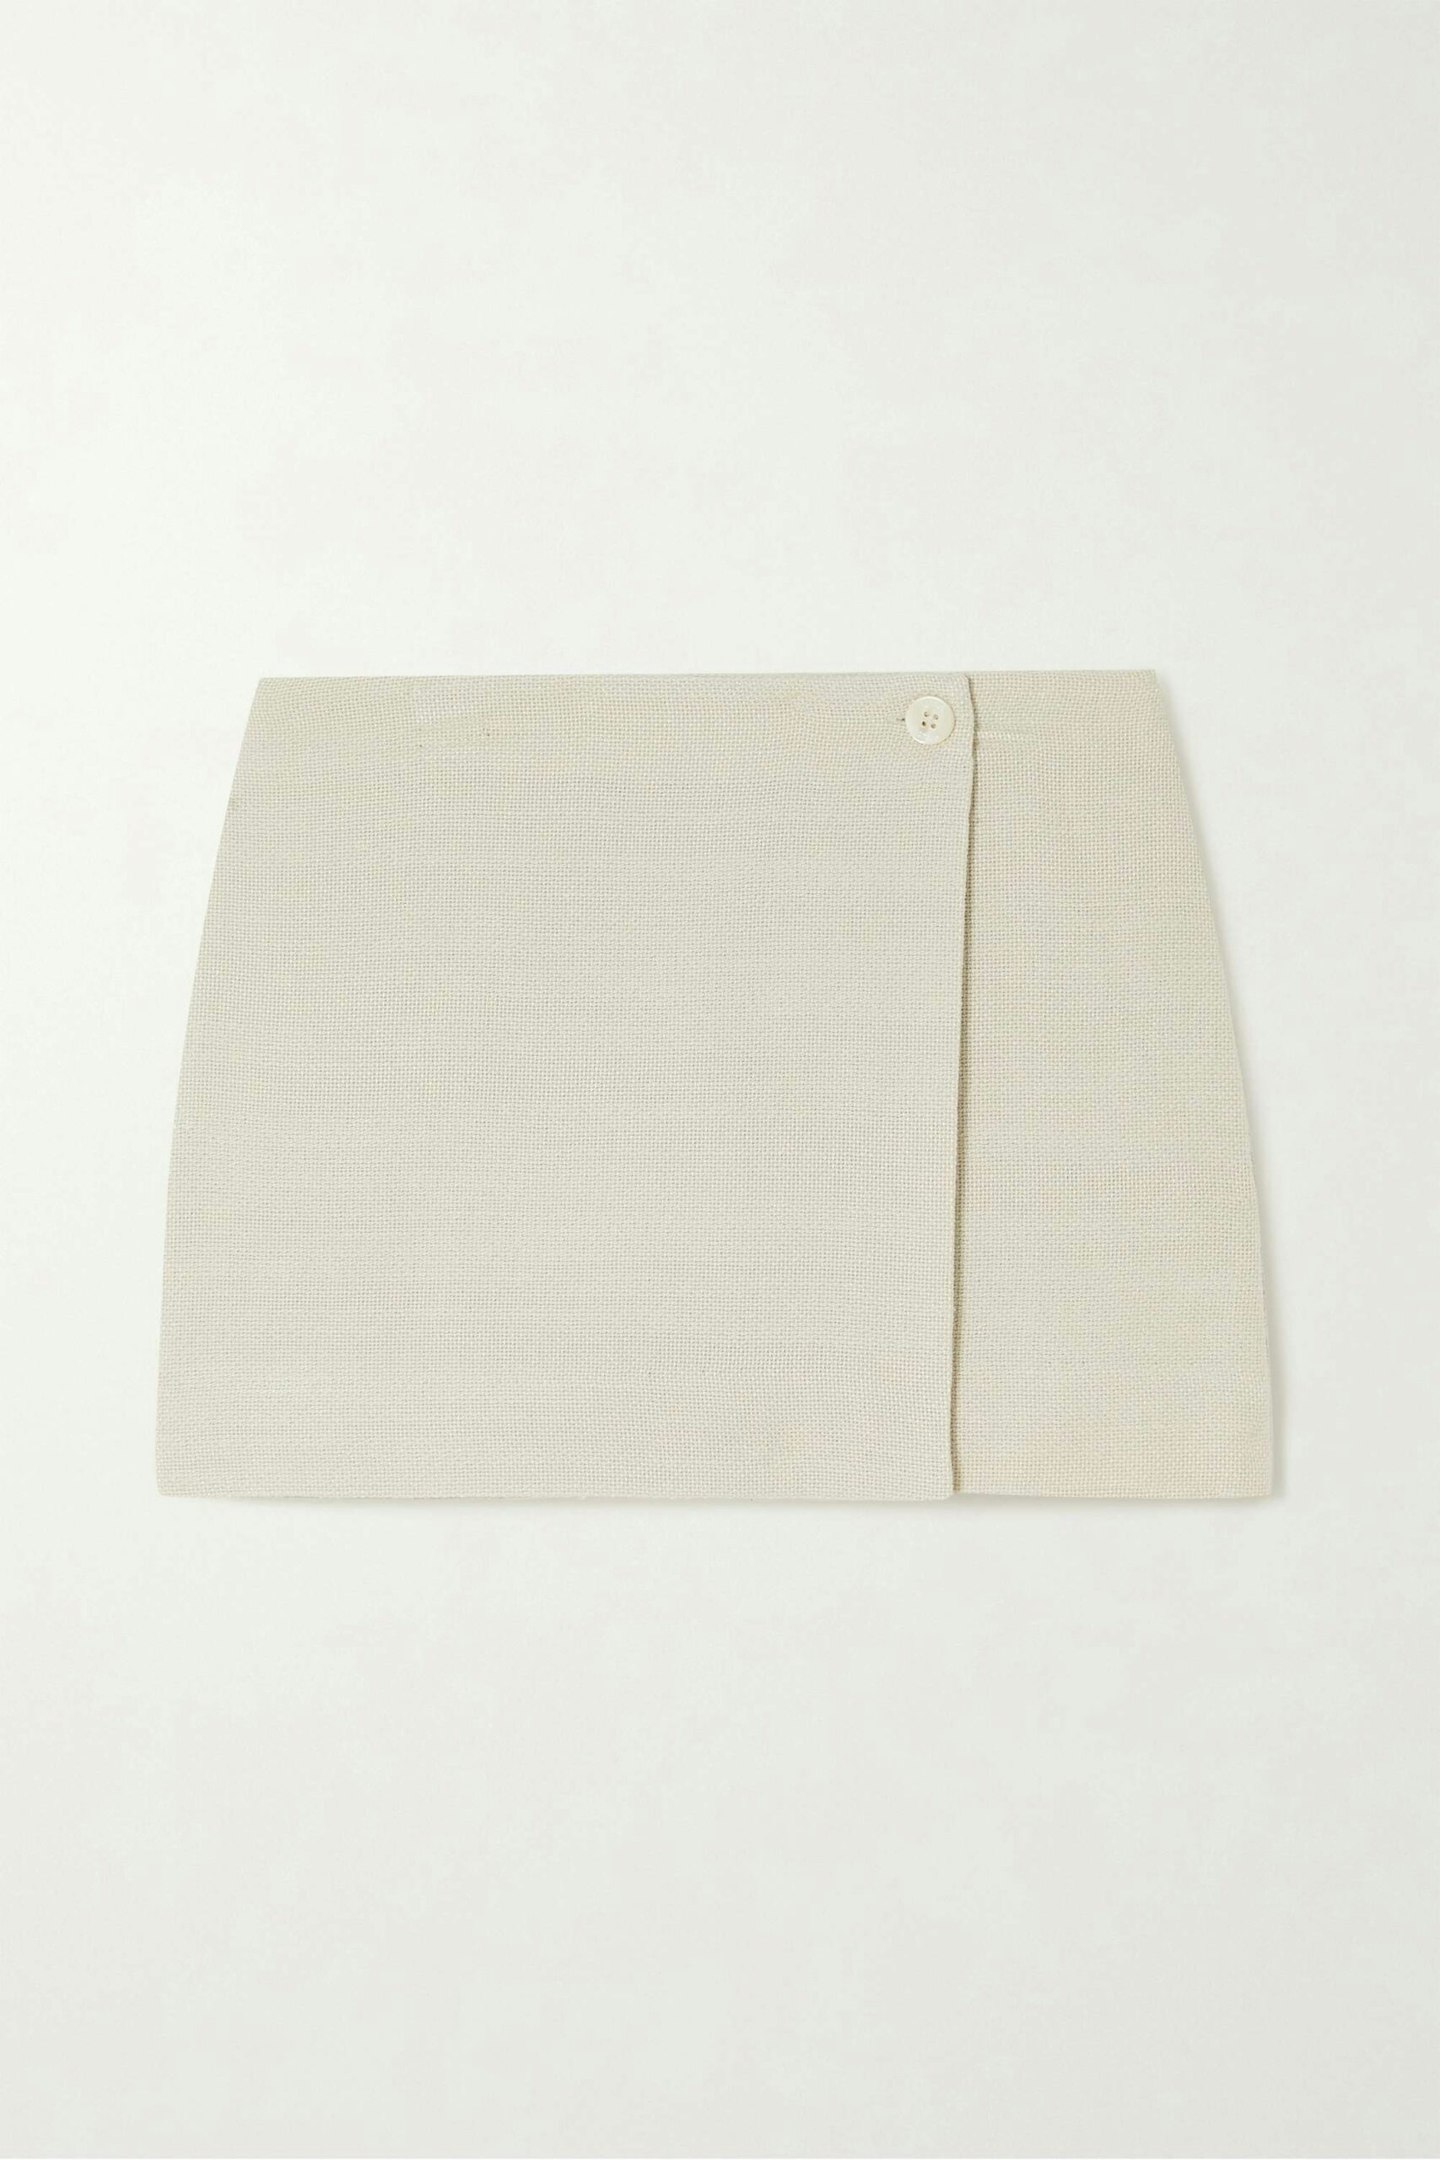 Staud, Tour Wrap-Effect Cotton-Blend Mini Skirt